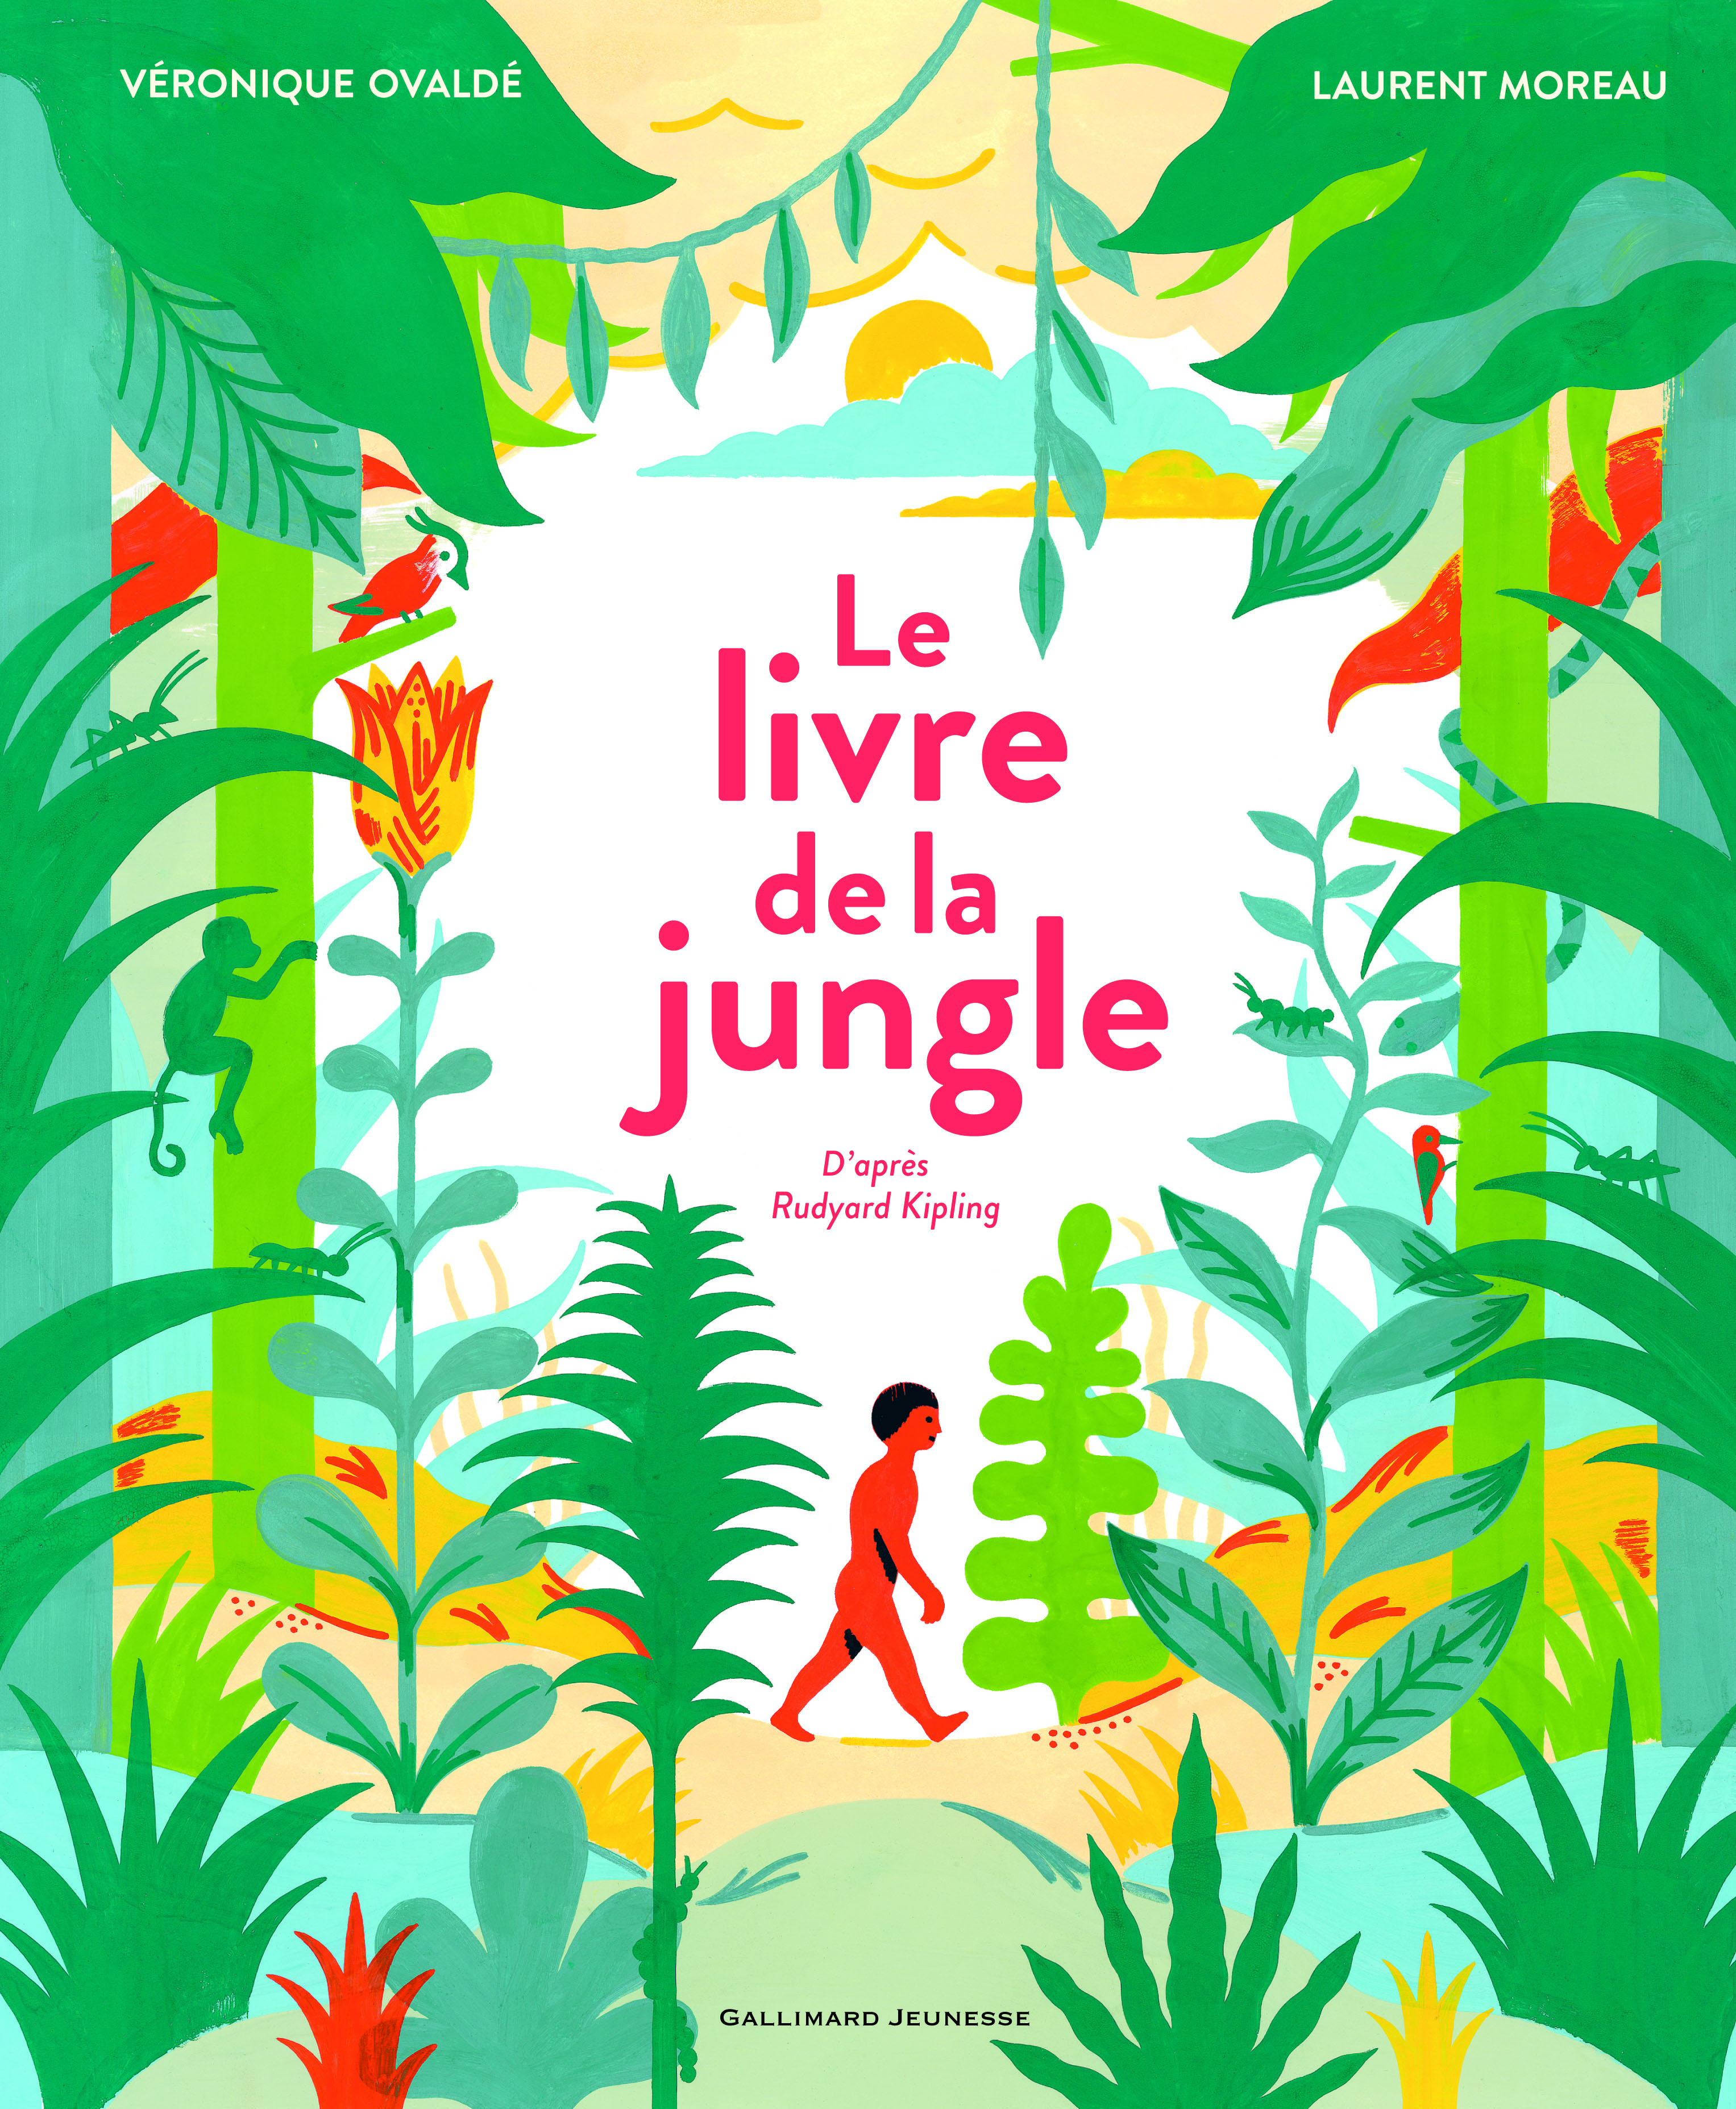 Le Livre De La Jungle Edition Librio Le Livre De La Jungle | arvigo.it